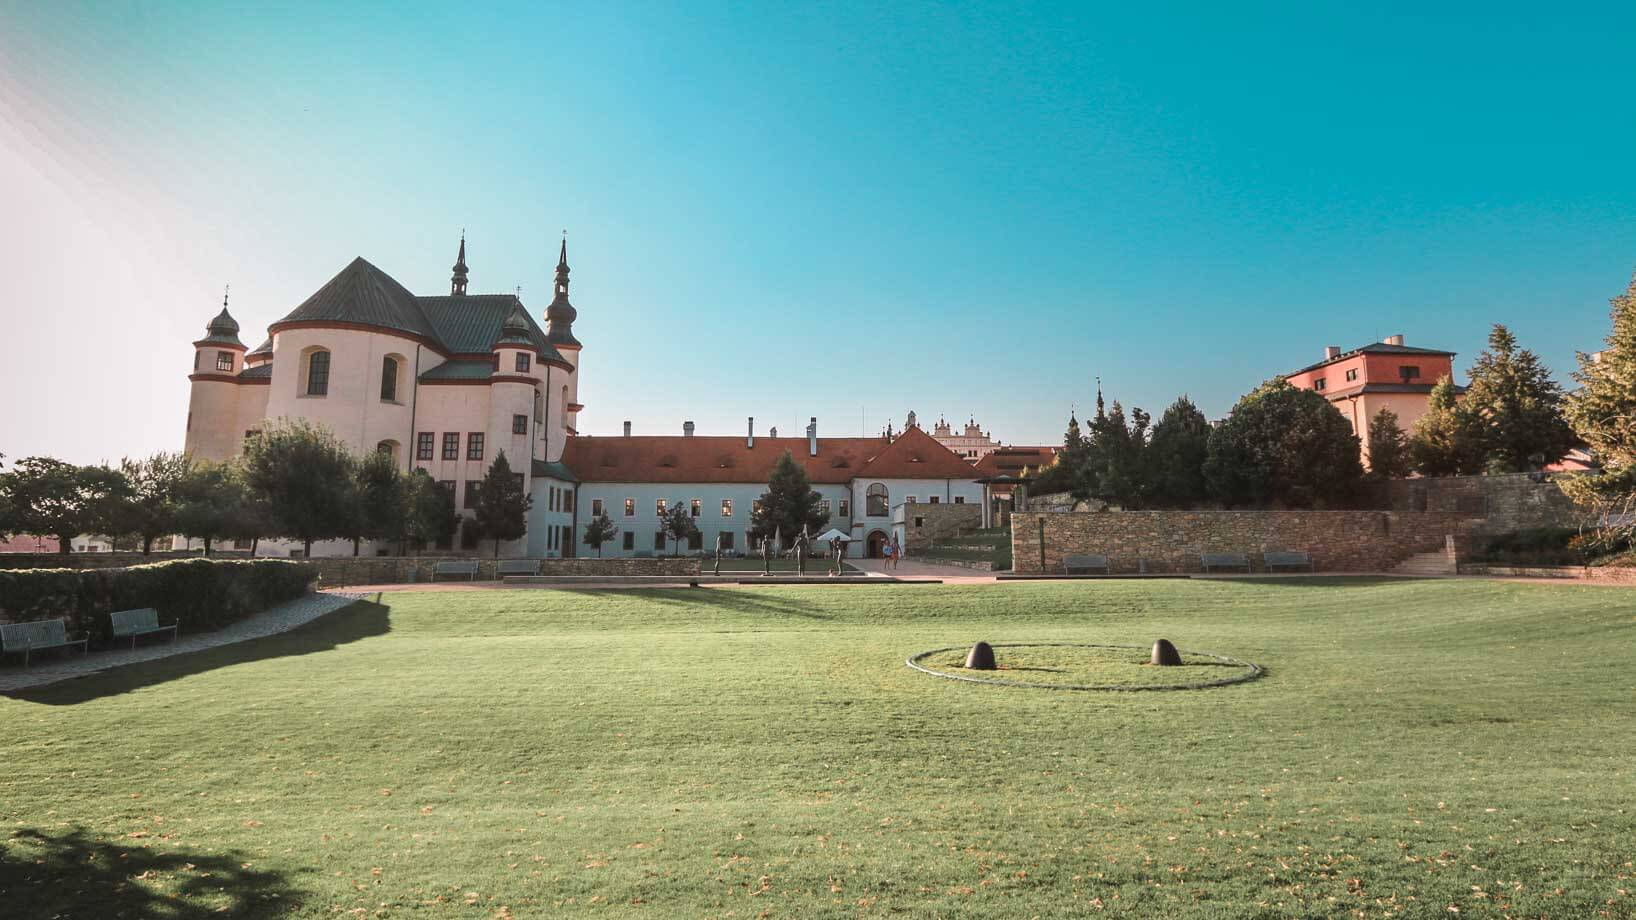 Monastery Garden - Visit Litomysl in Czechia - the New Paris for Bohemian Souls